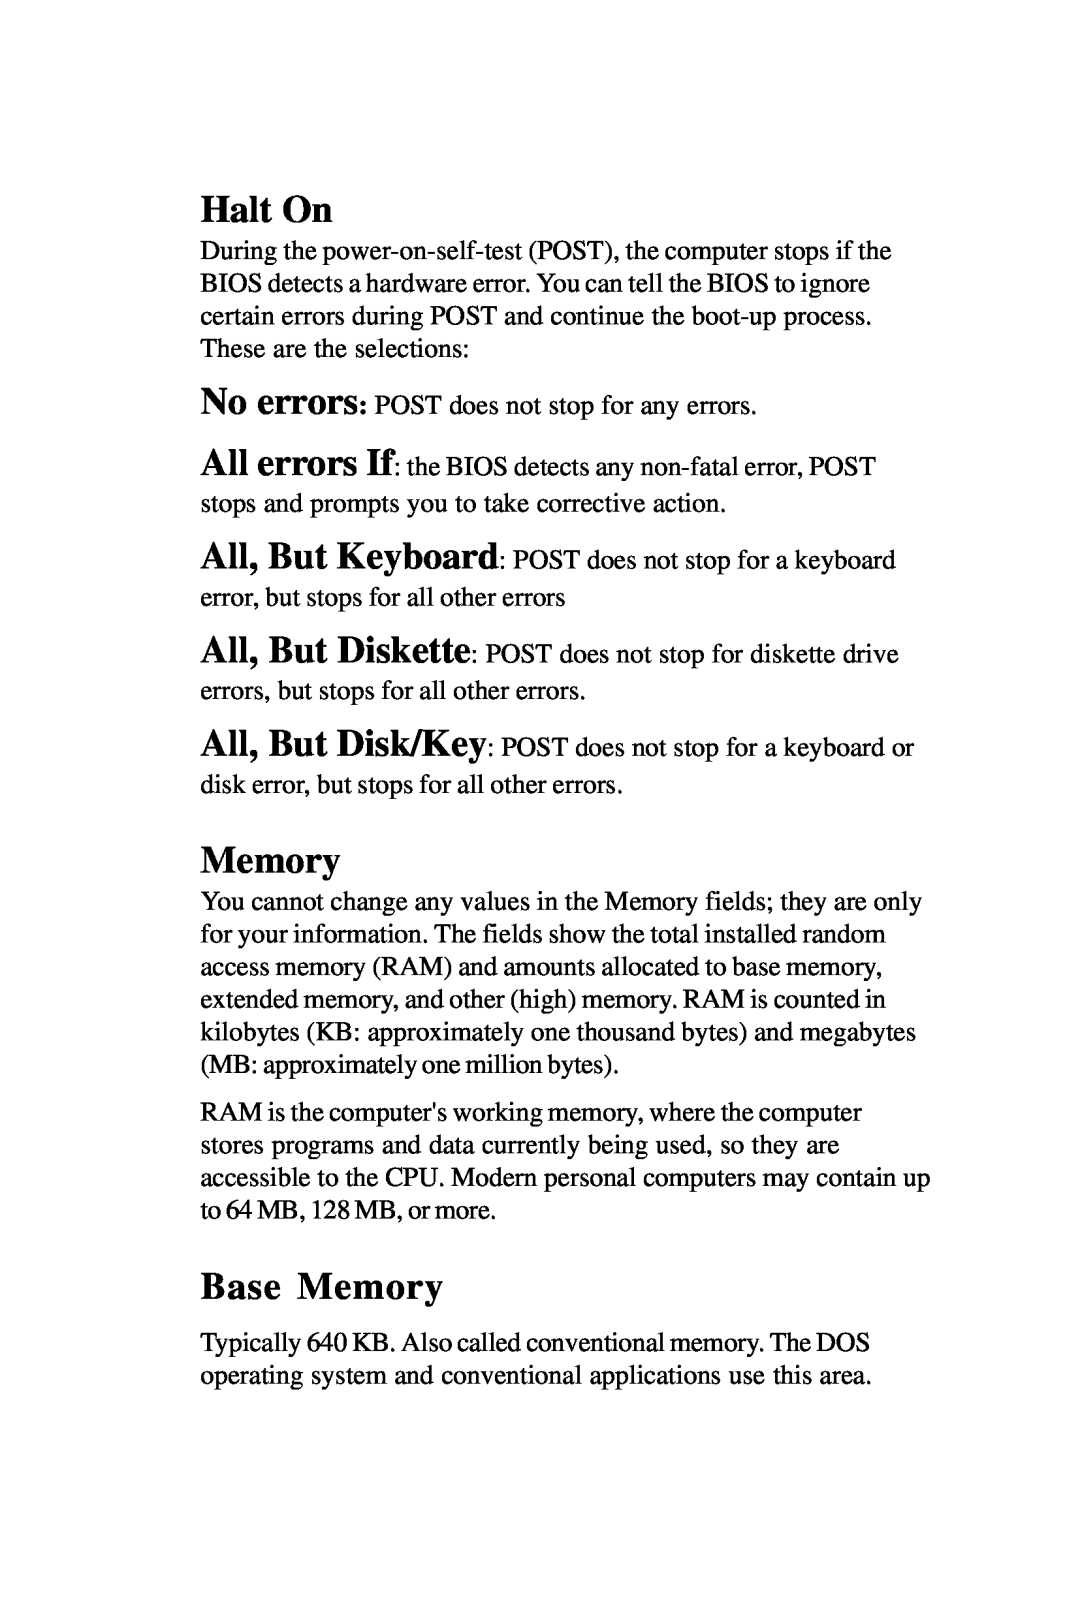 Intel PCM-6896 manual Halt On, Base Memory 